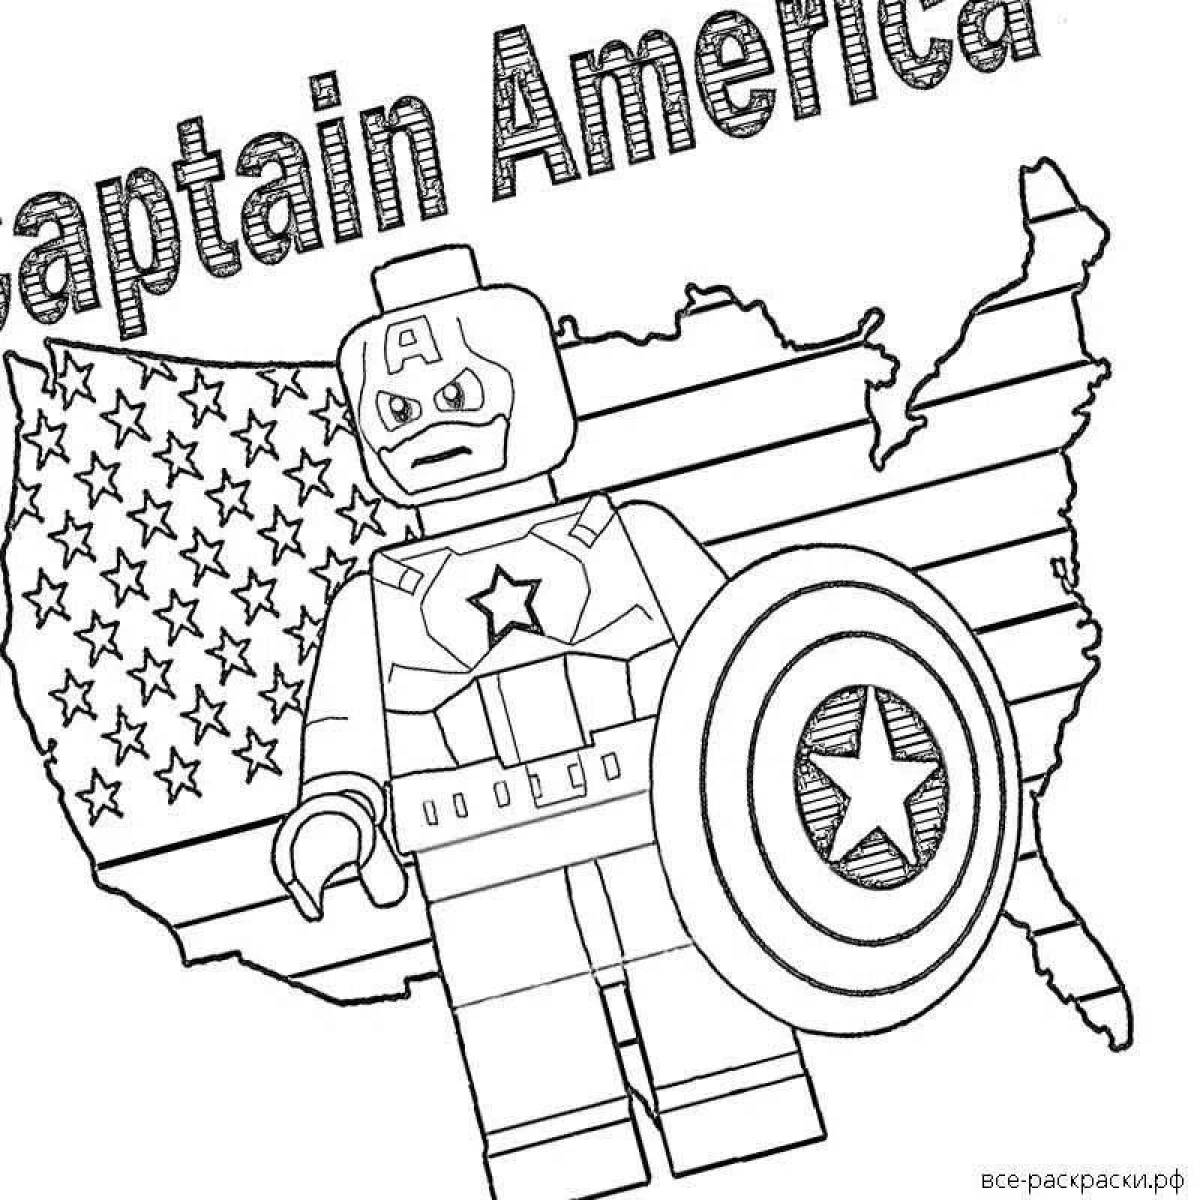 Energetic lego captain america coloring book